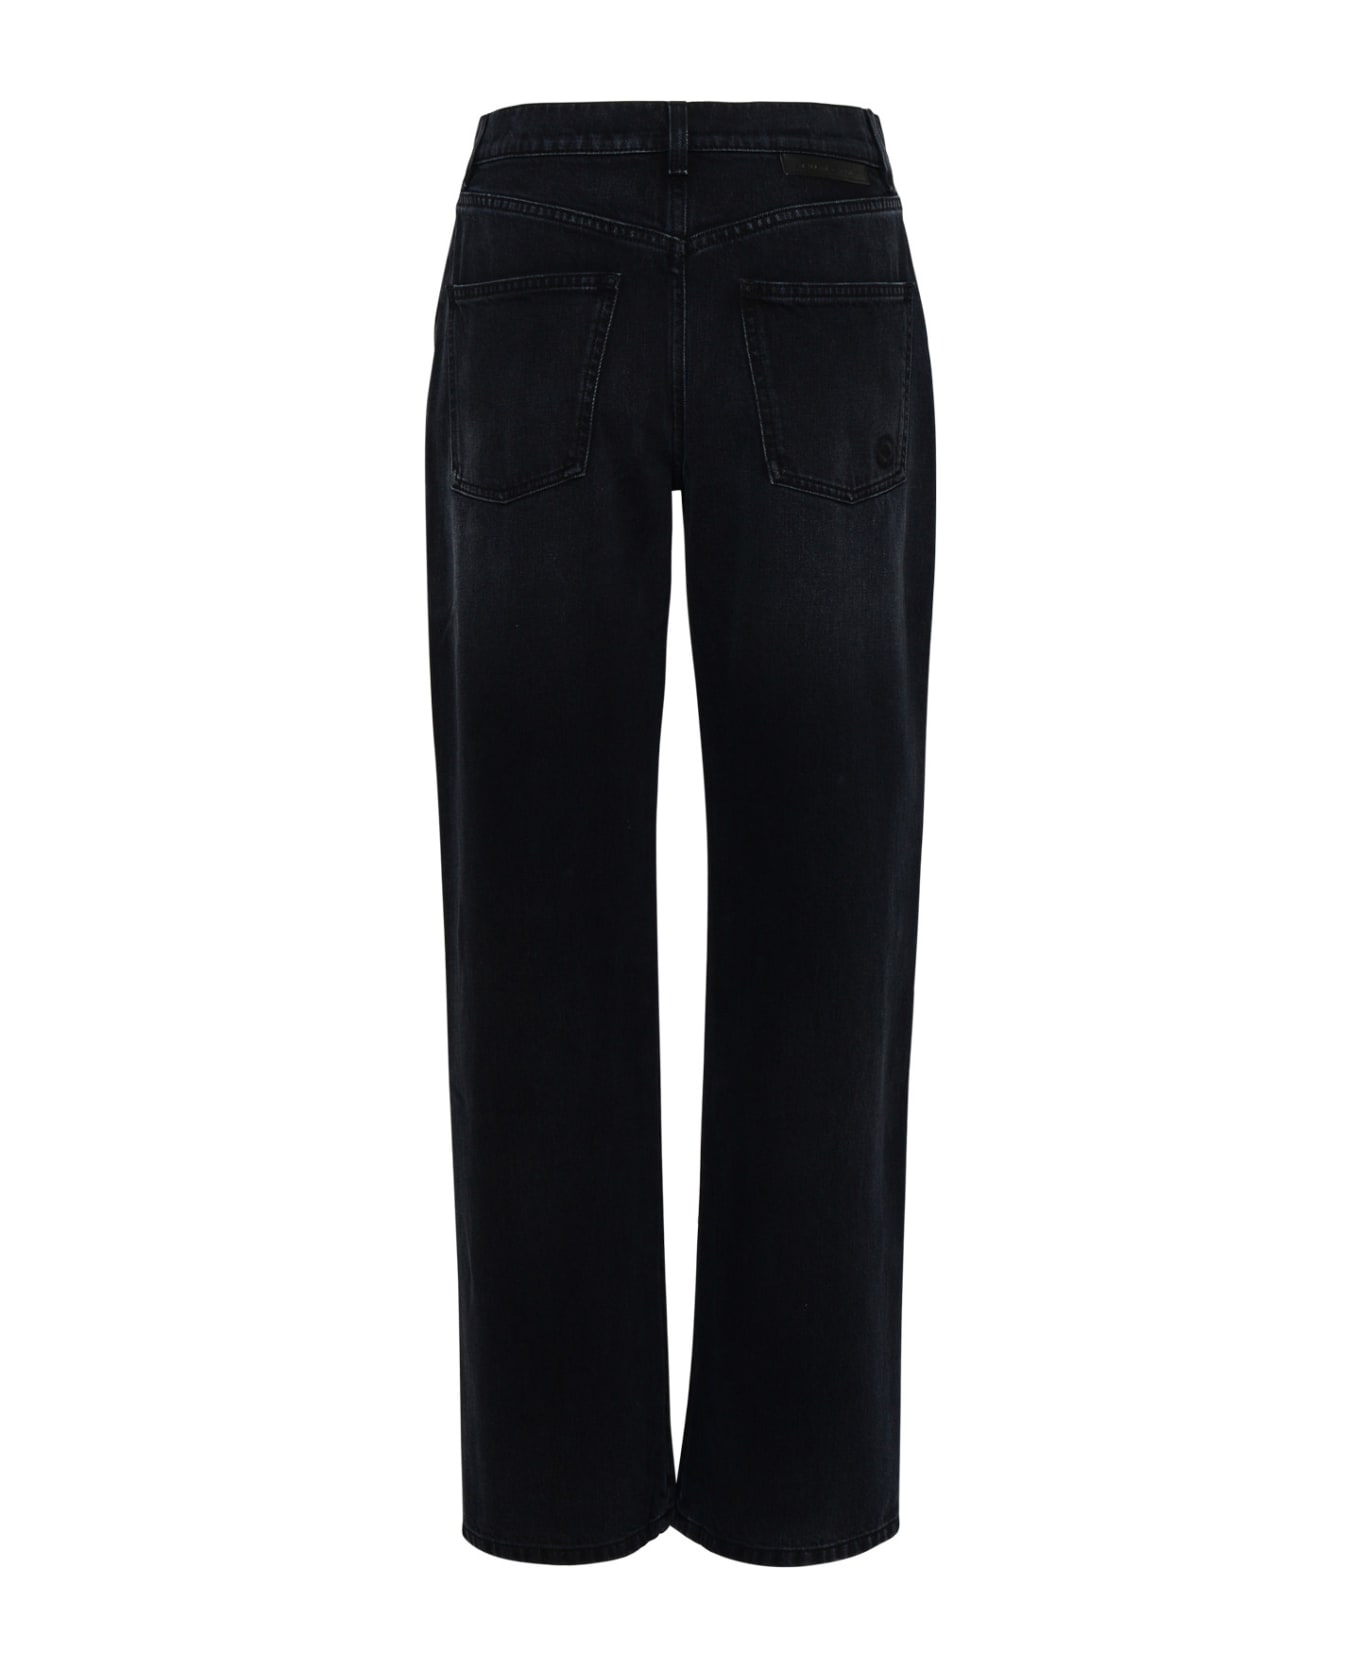 Stella McCartney Black Denim Jeans - Black